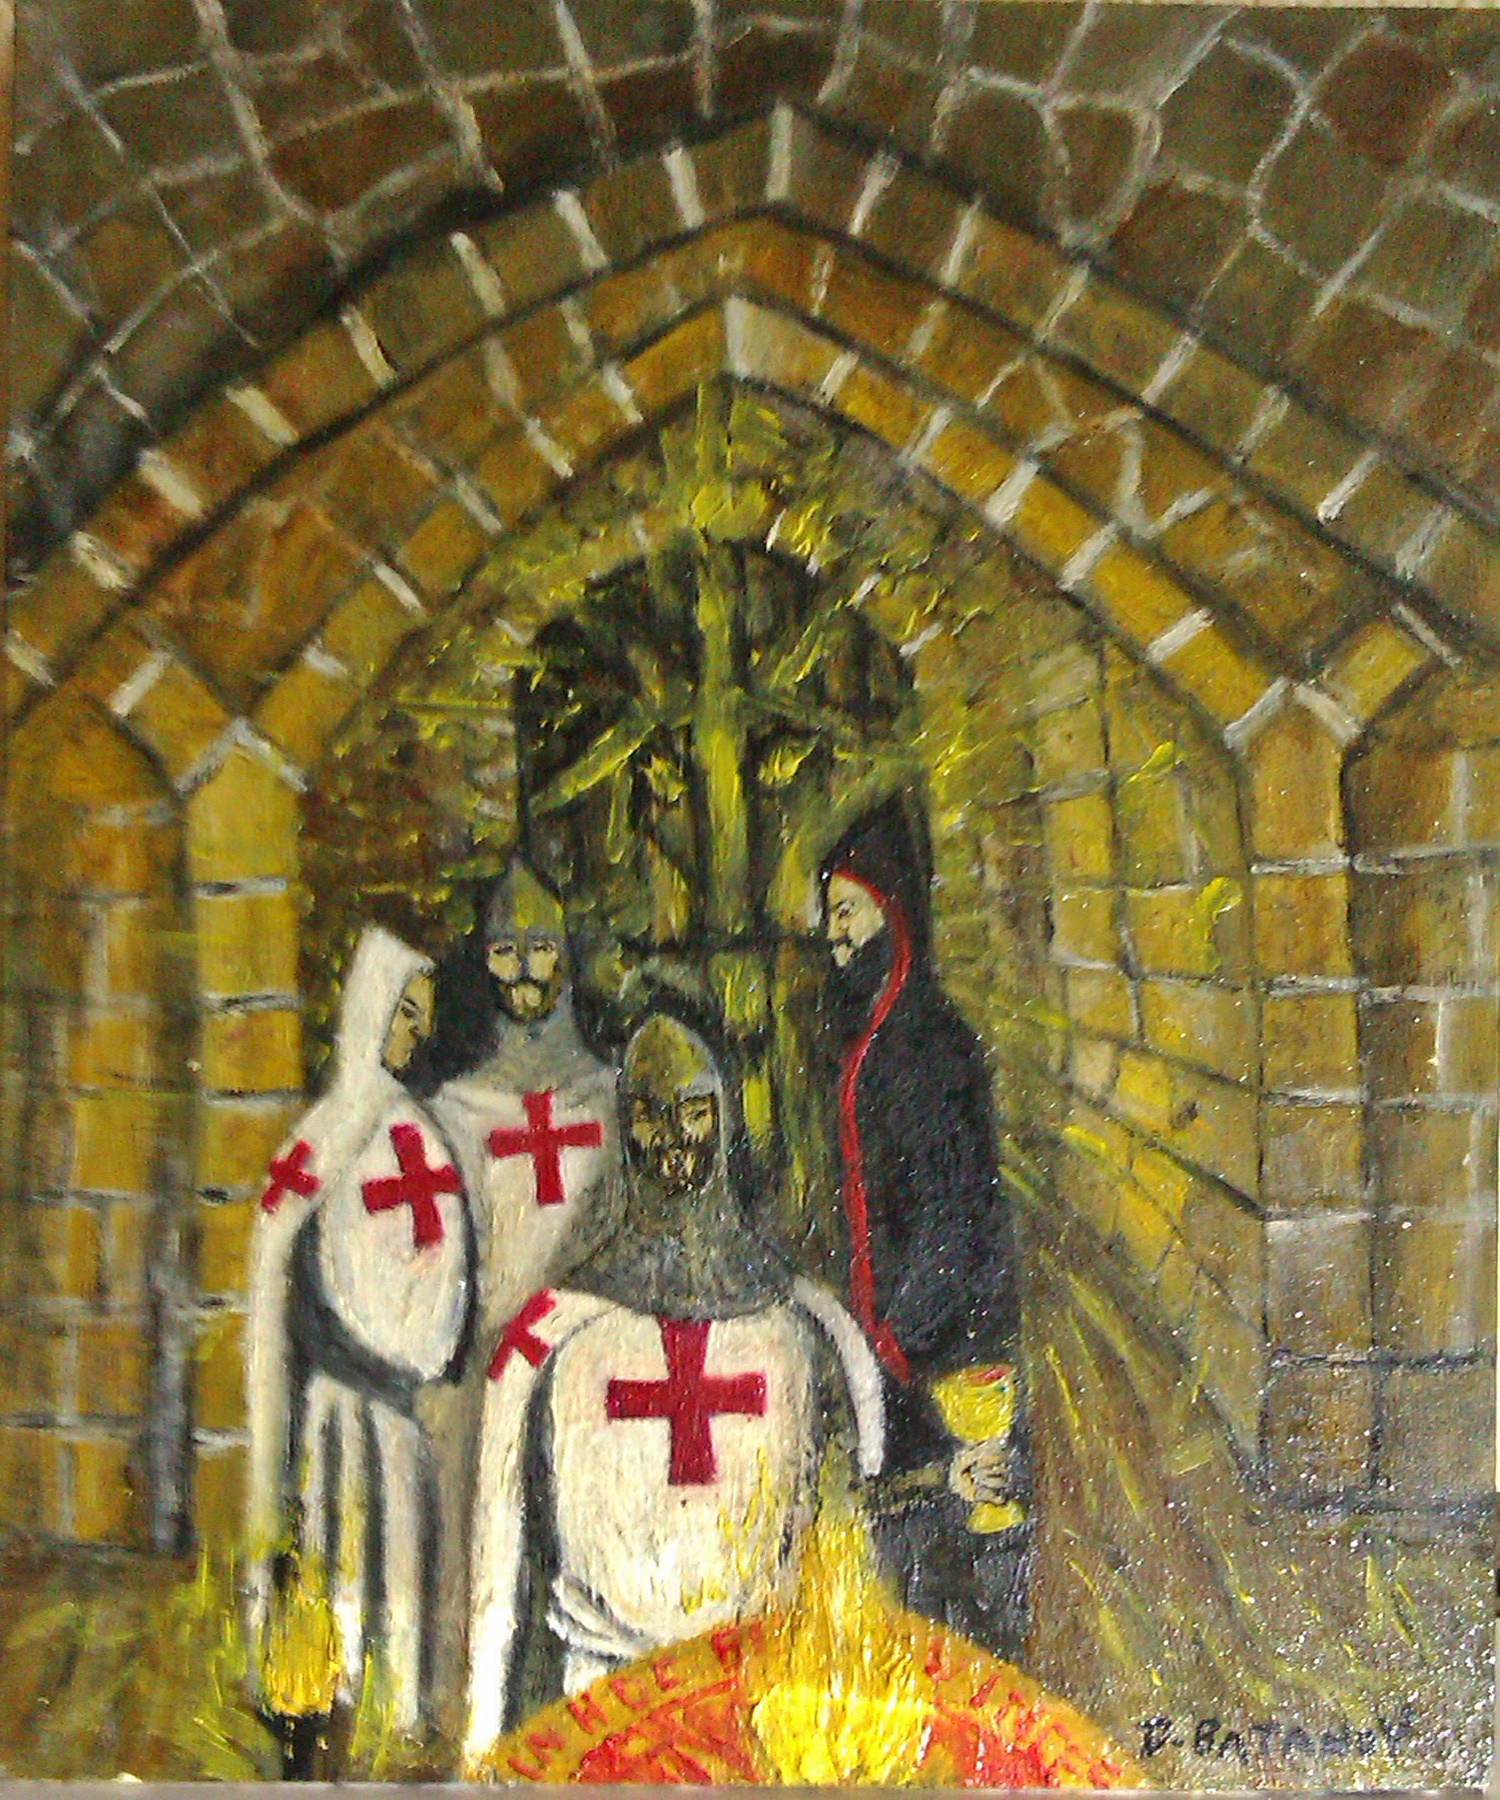 Painting The Templars